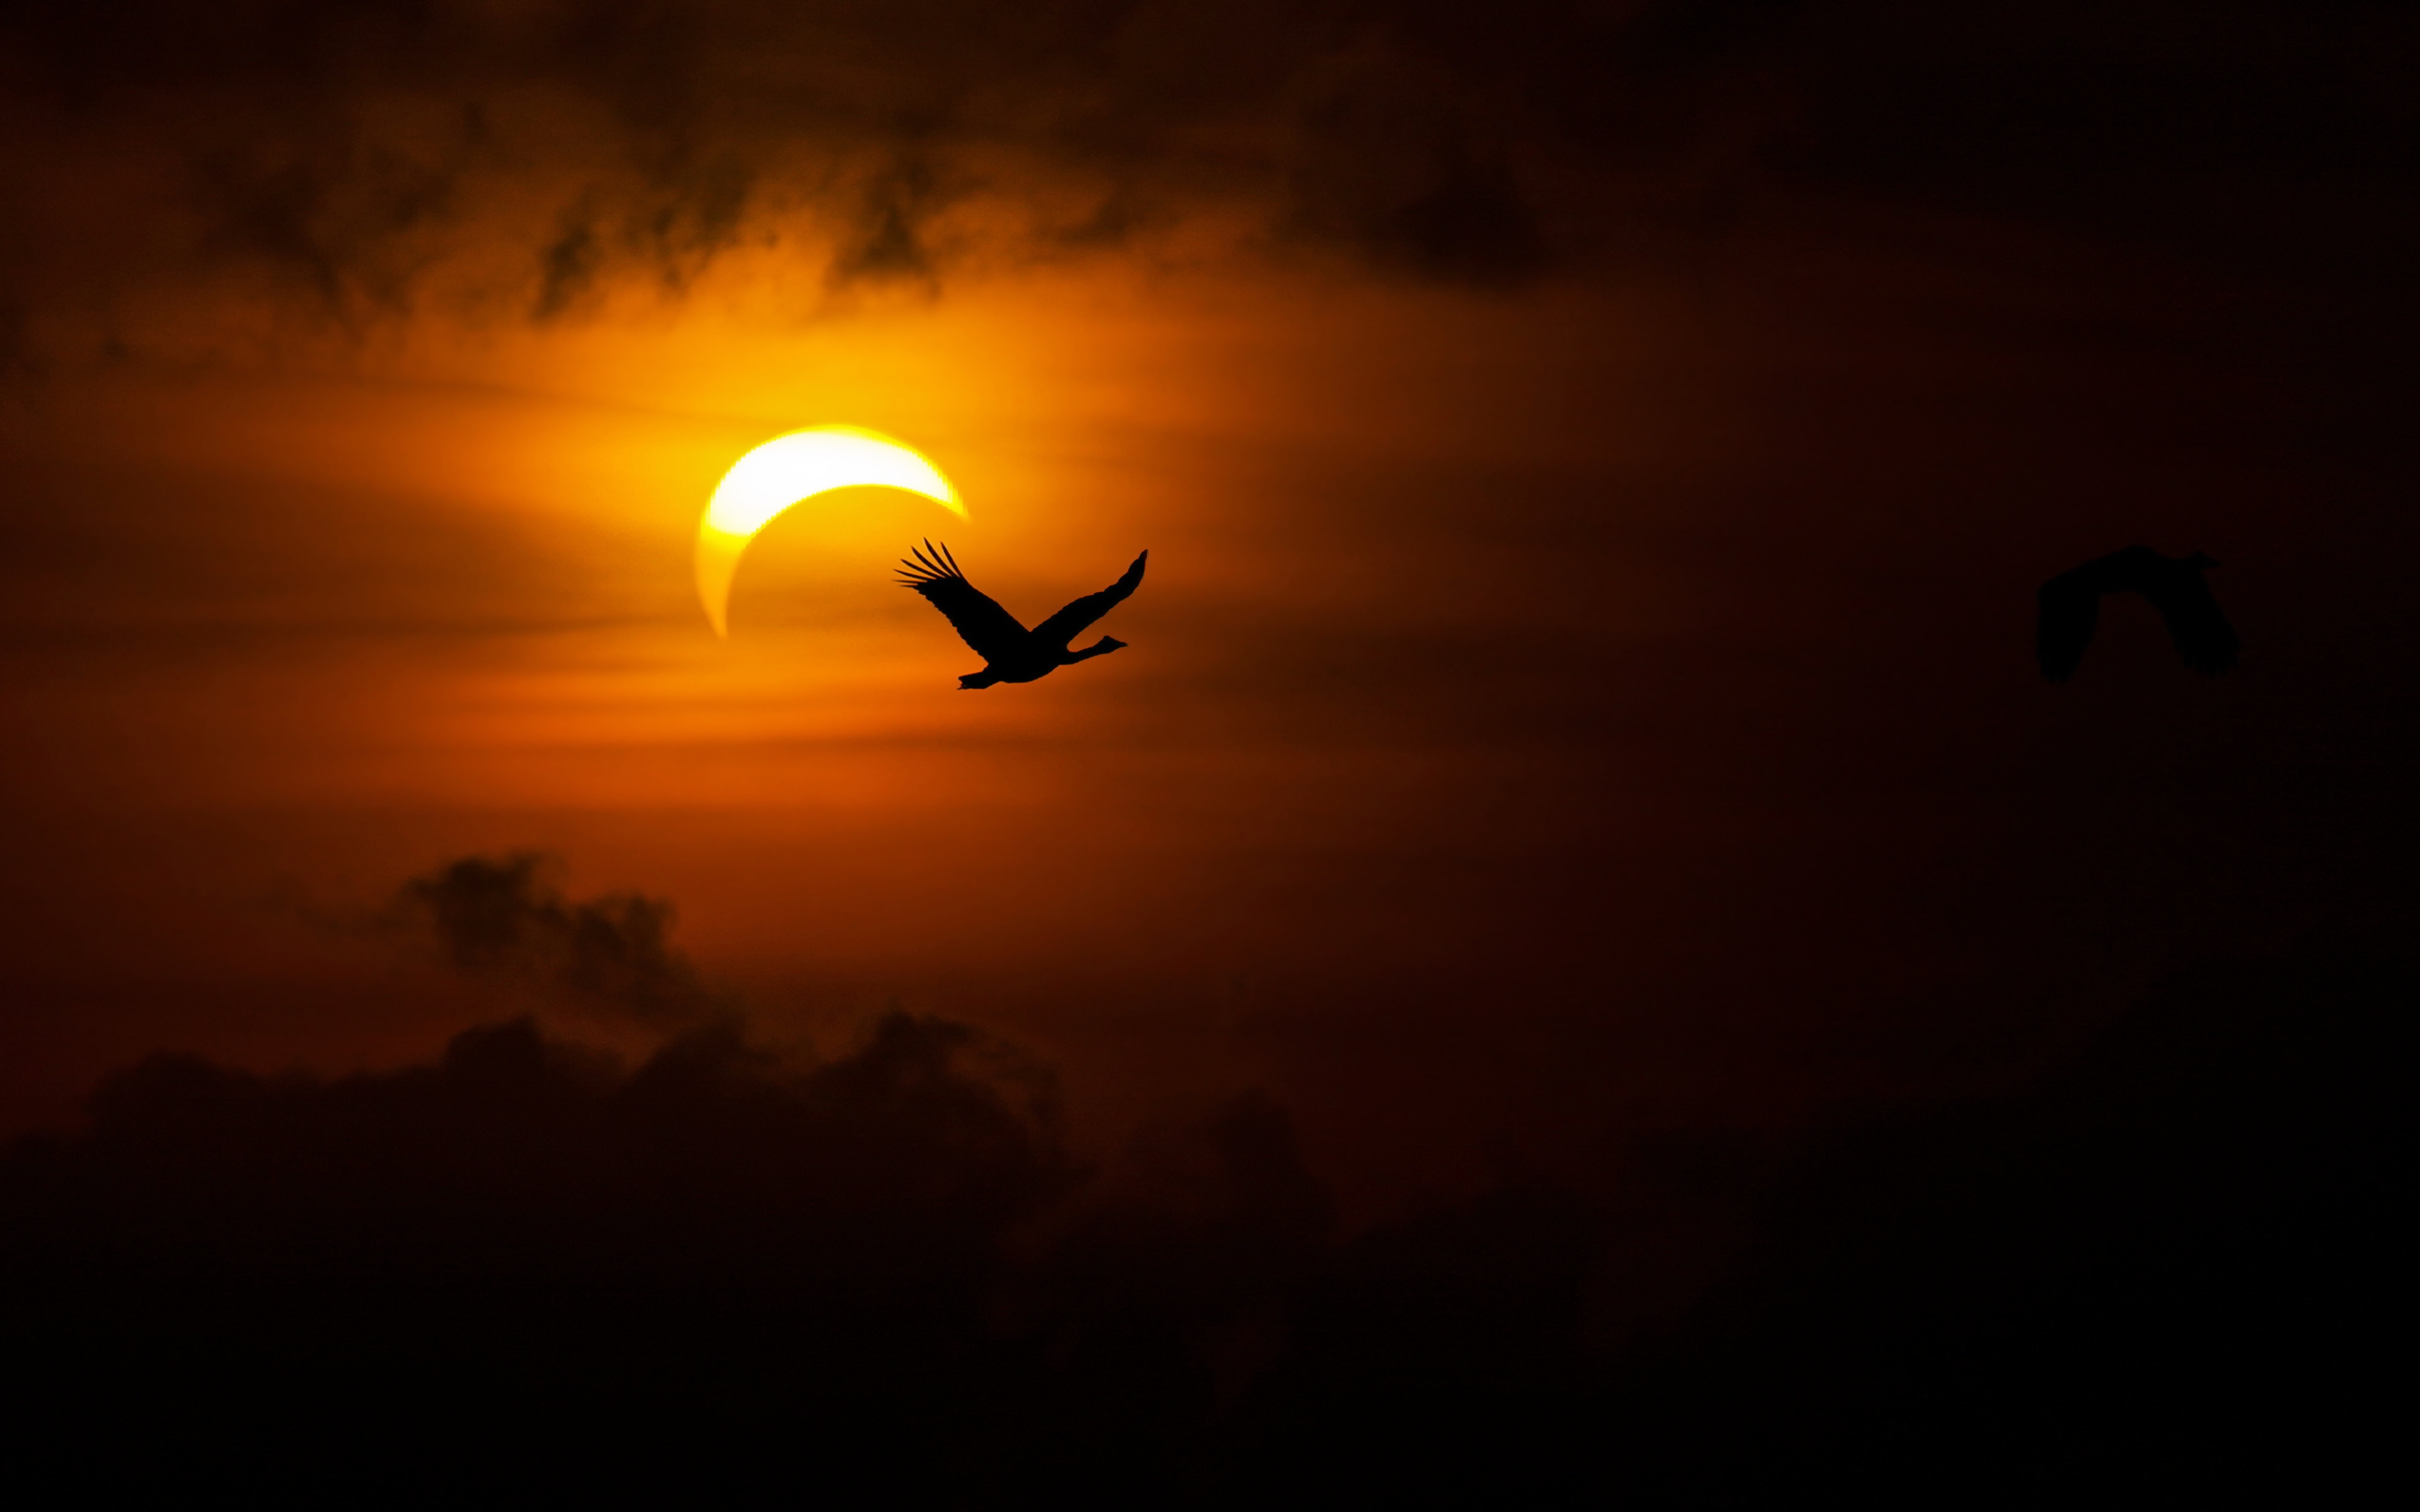 Solar Eclipse Pictures  Download Free Images on Unsplash